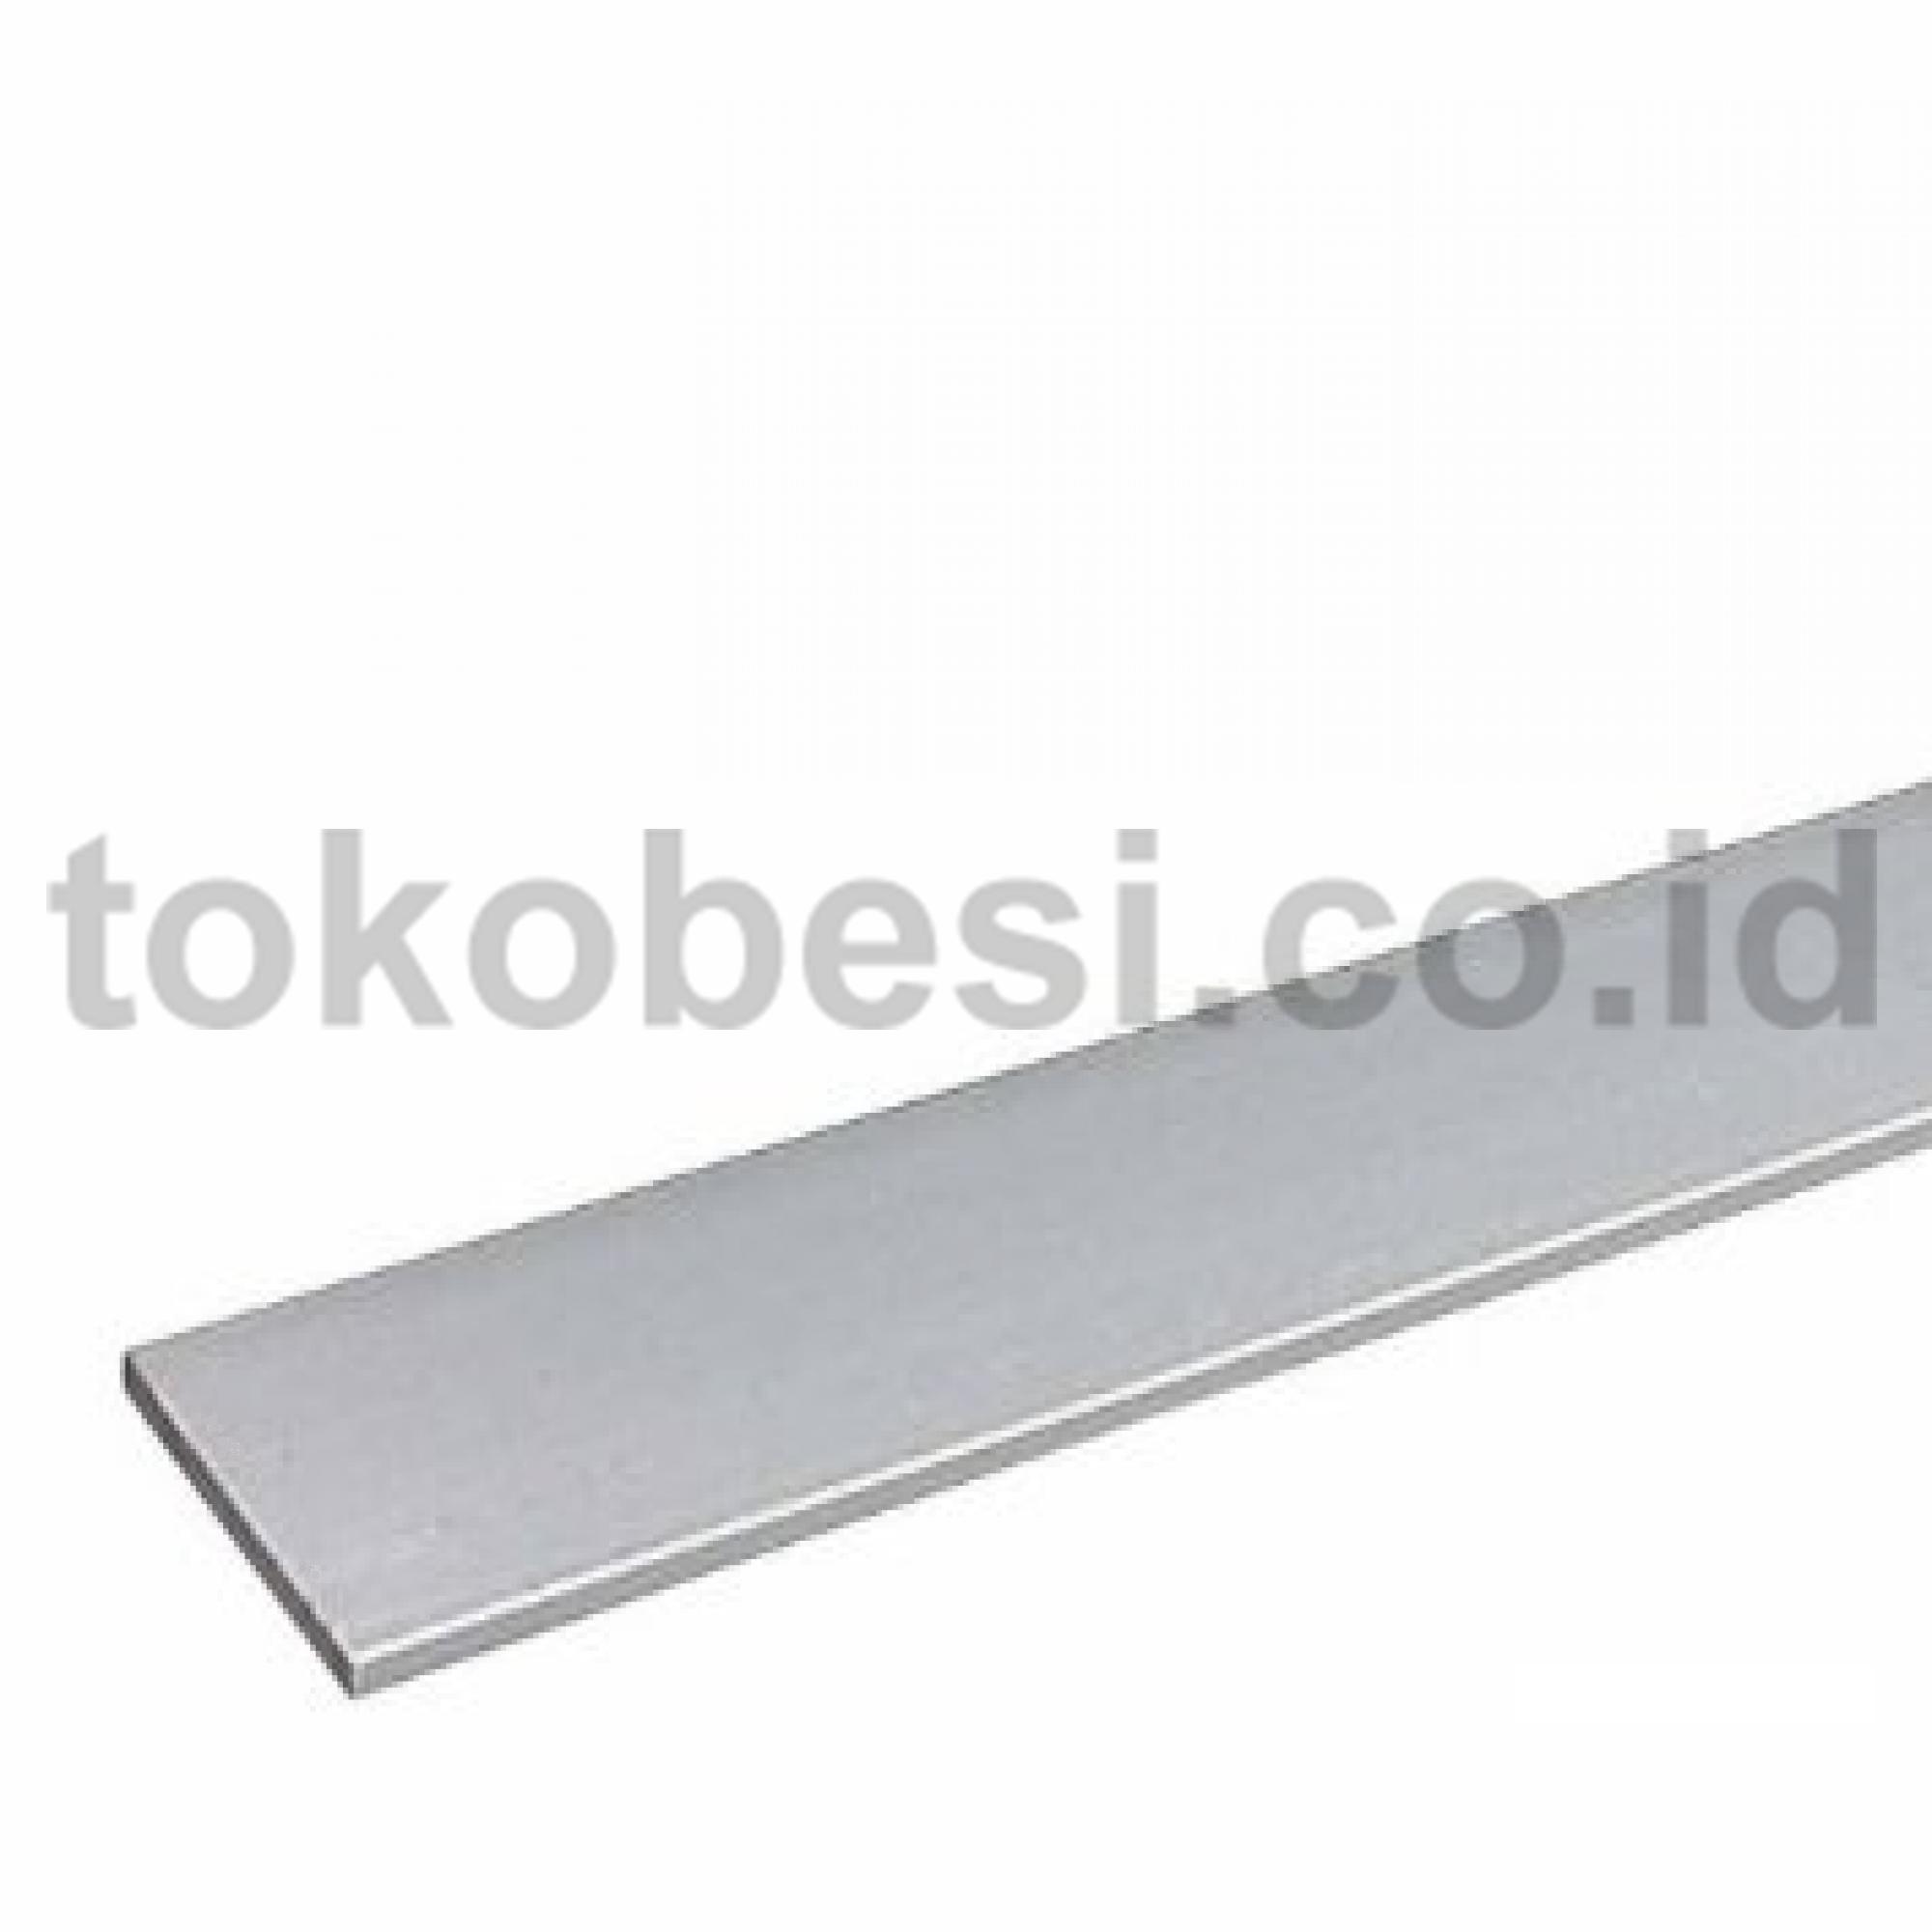 Strip Stainless Steel 304 ≠ 10 x 30 x 6000 mm